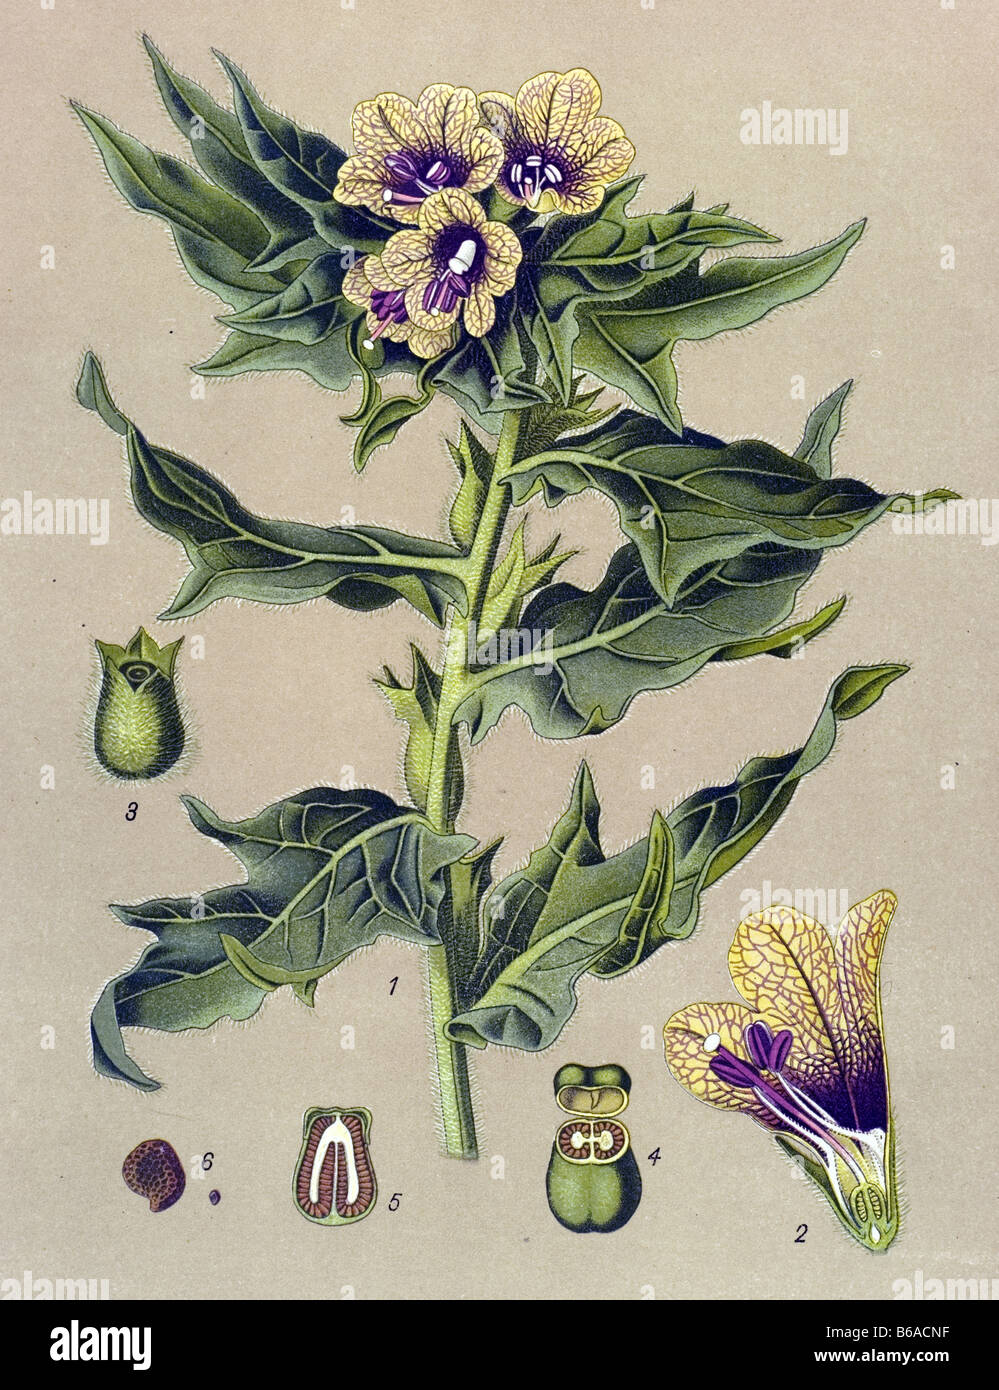 Henbane, Hyoscyamus niger poisonous plants illustrations Stock Photo